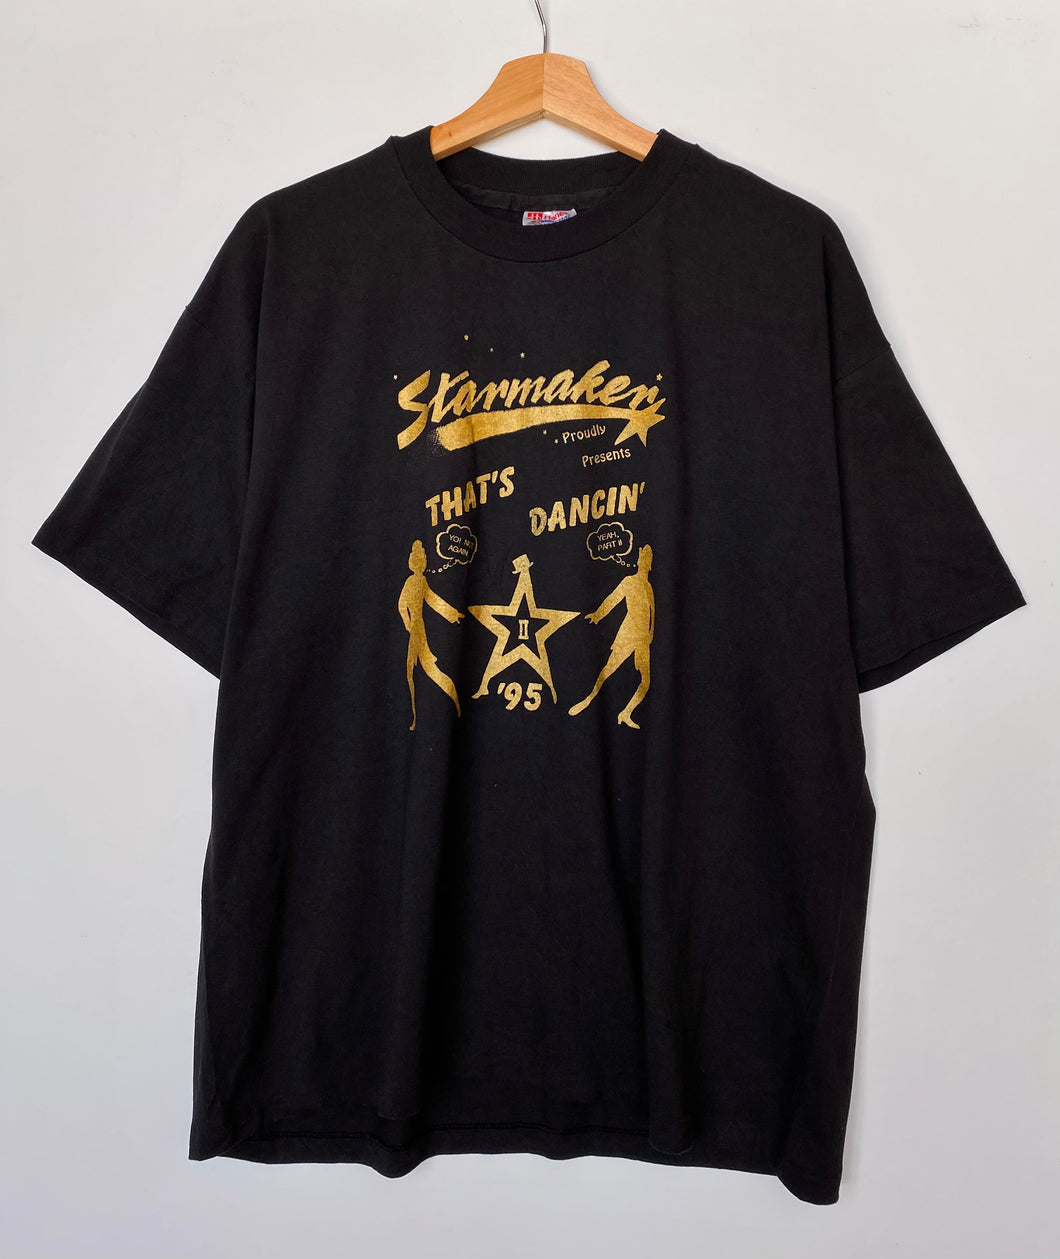 Printed ‘Star maker 1995’ t-shirt (XL)